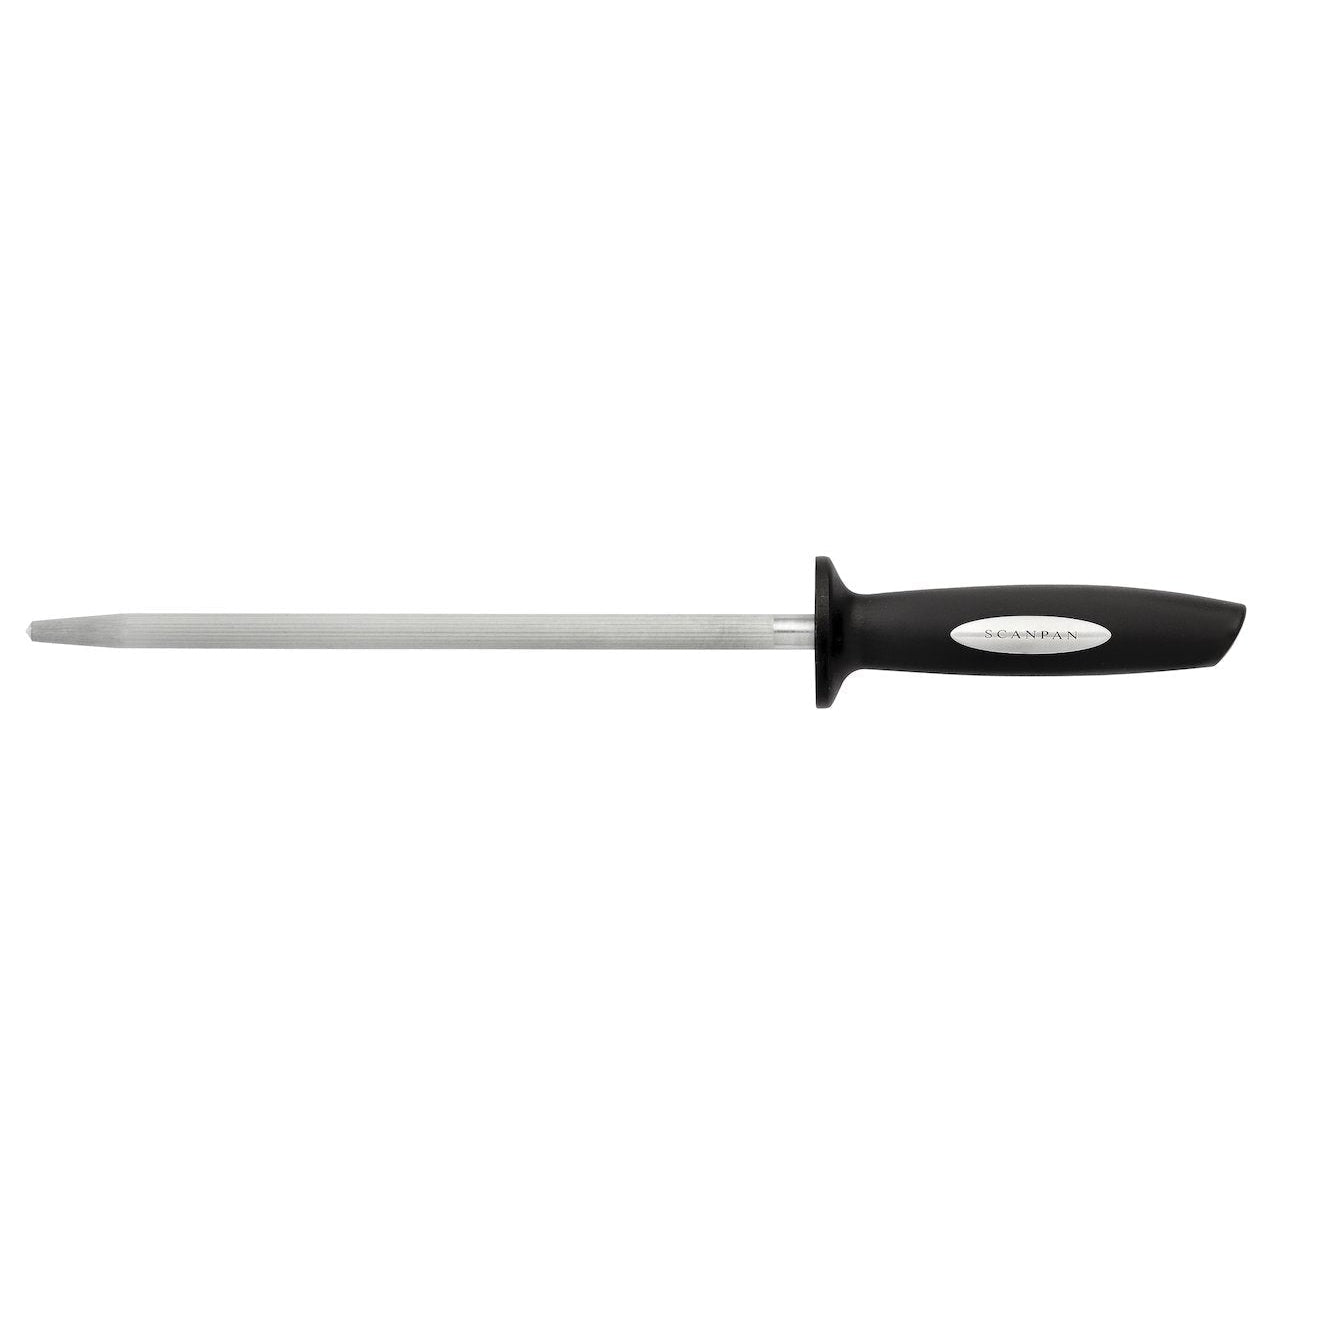 SCANPAN Classic Knives - 25cm Honing Steel